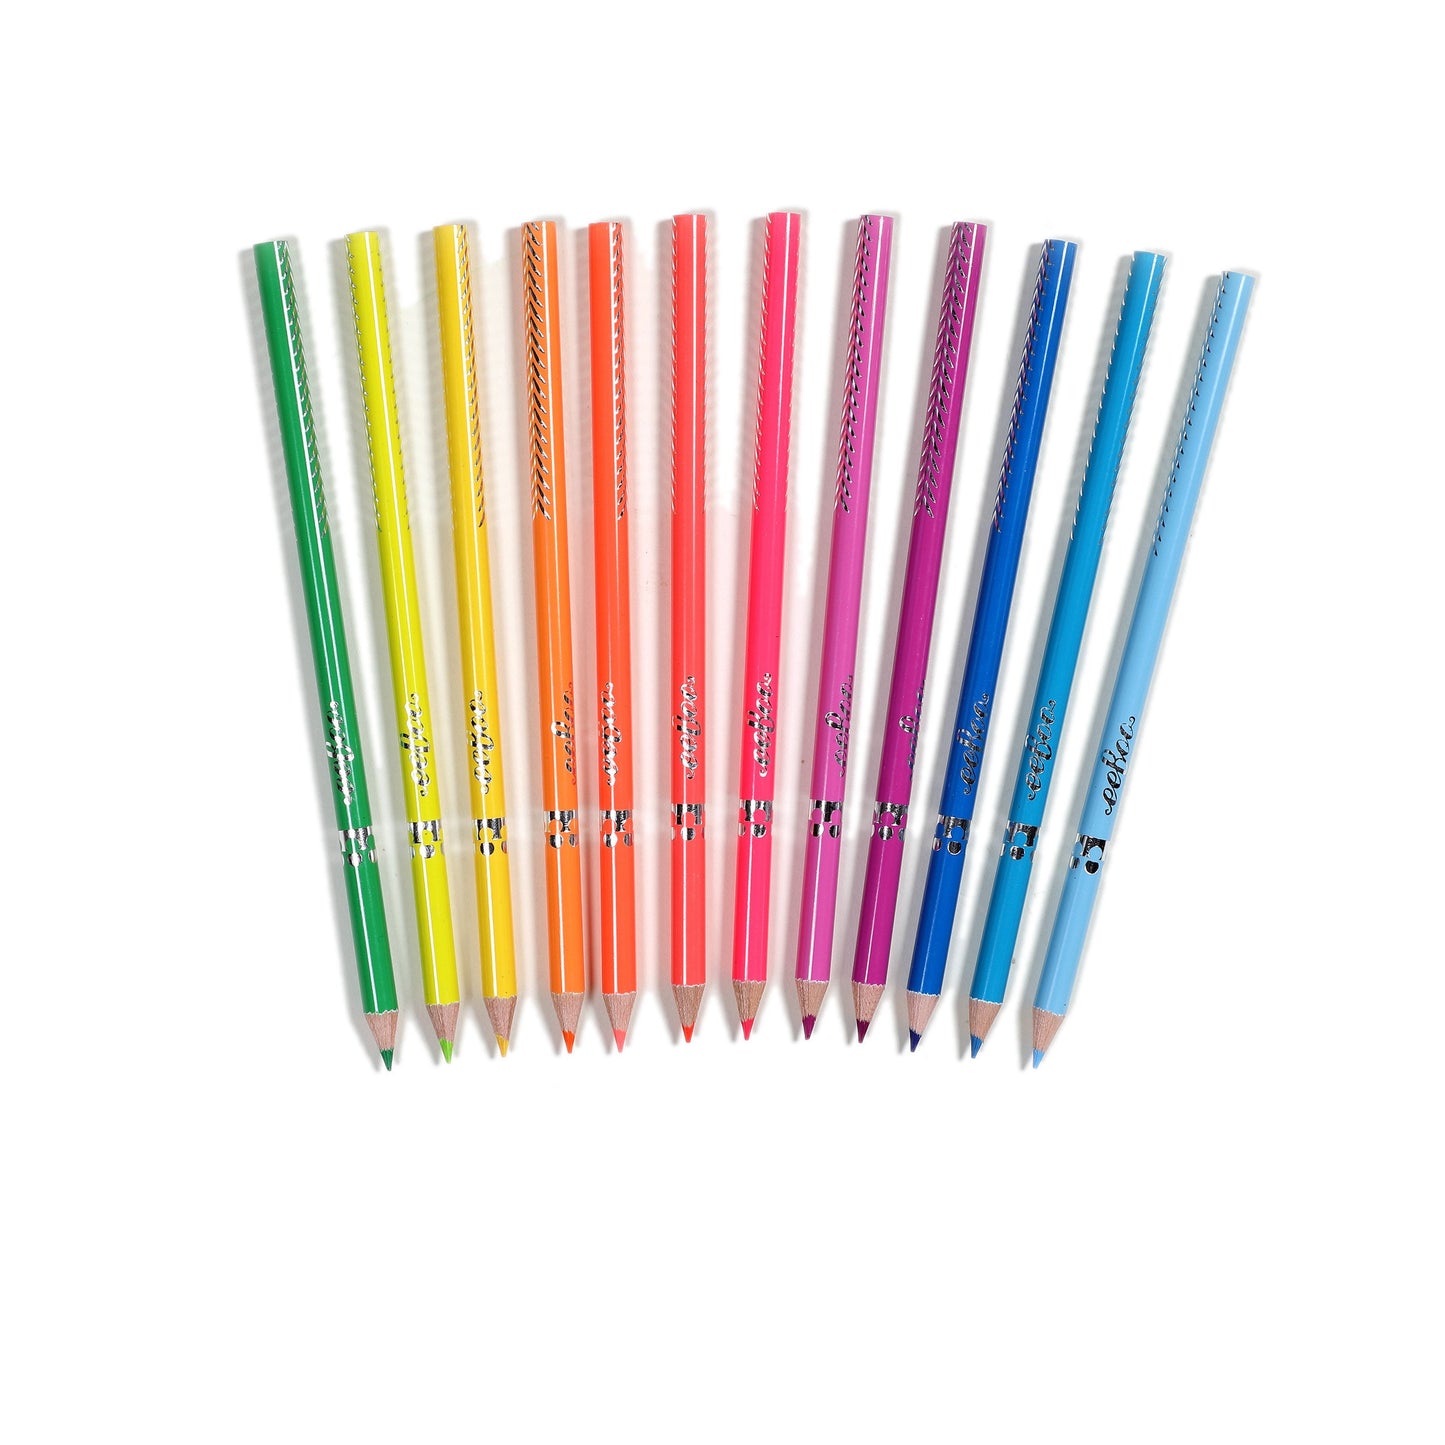 Zodiac Fluorescent pencils